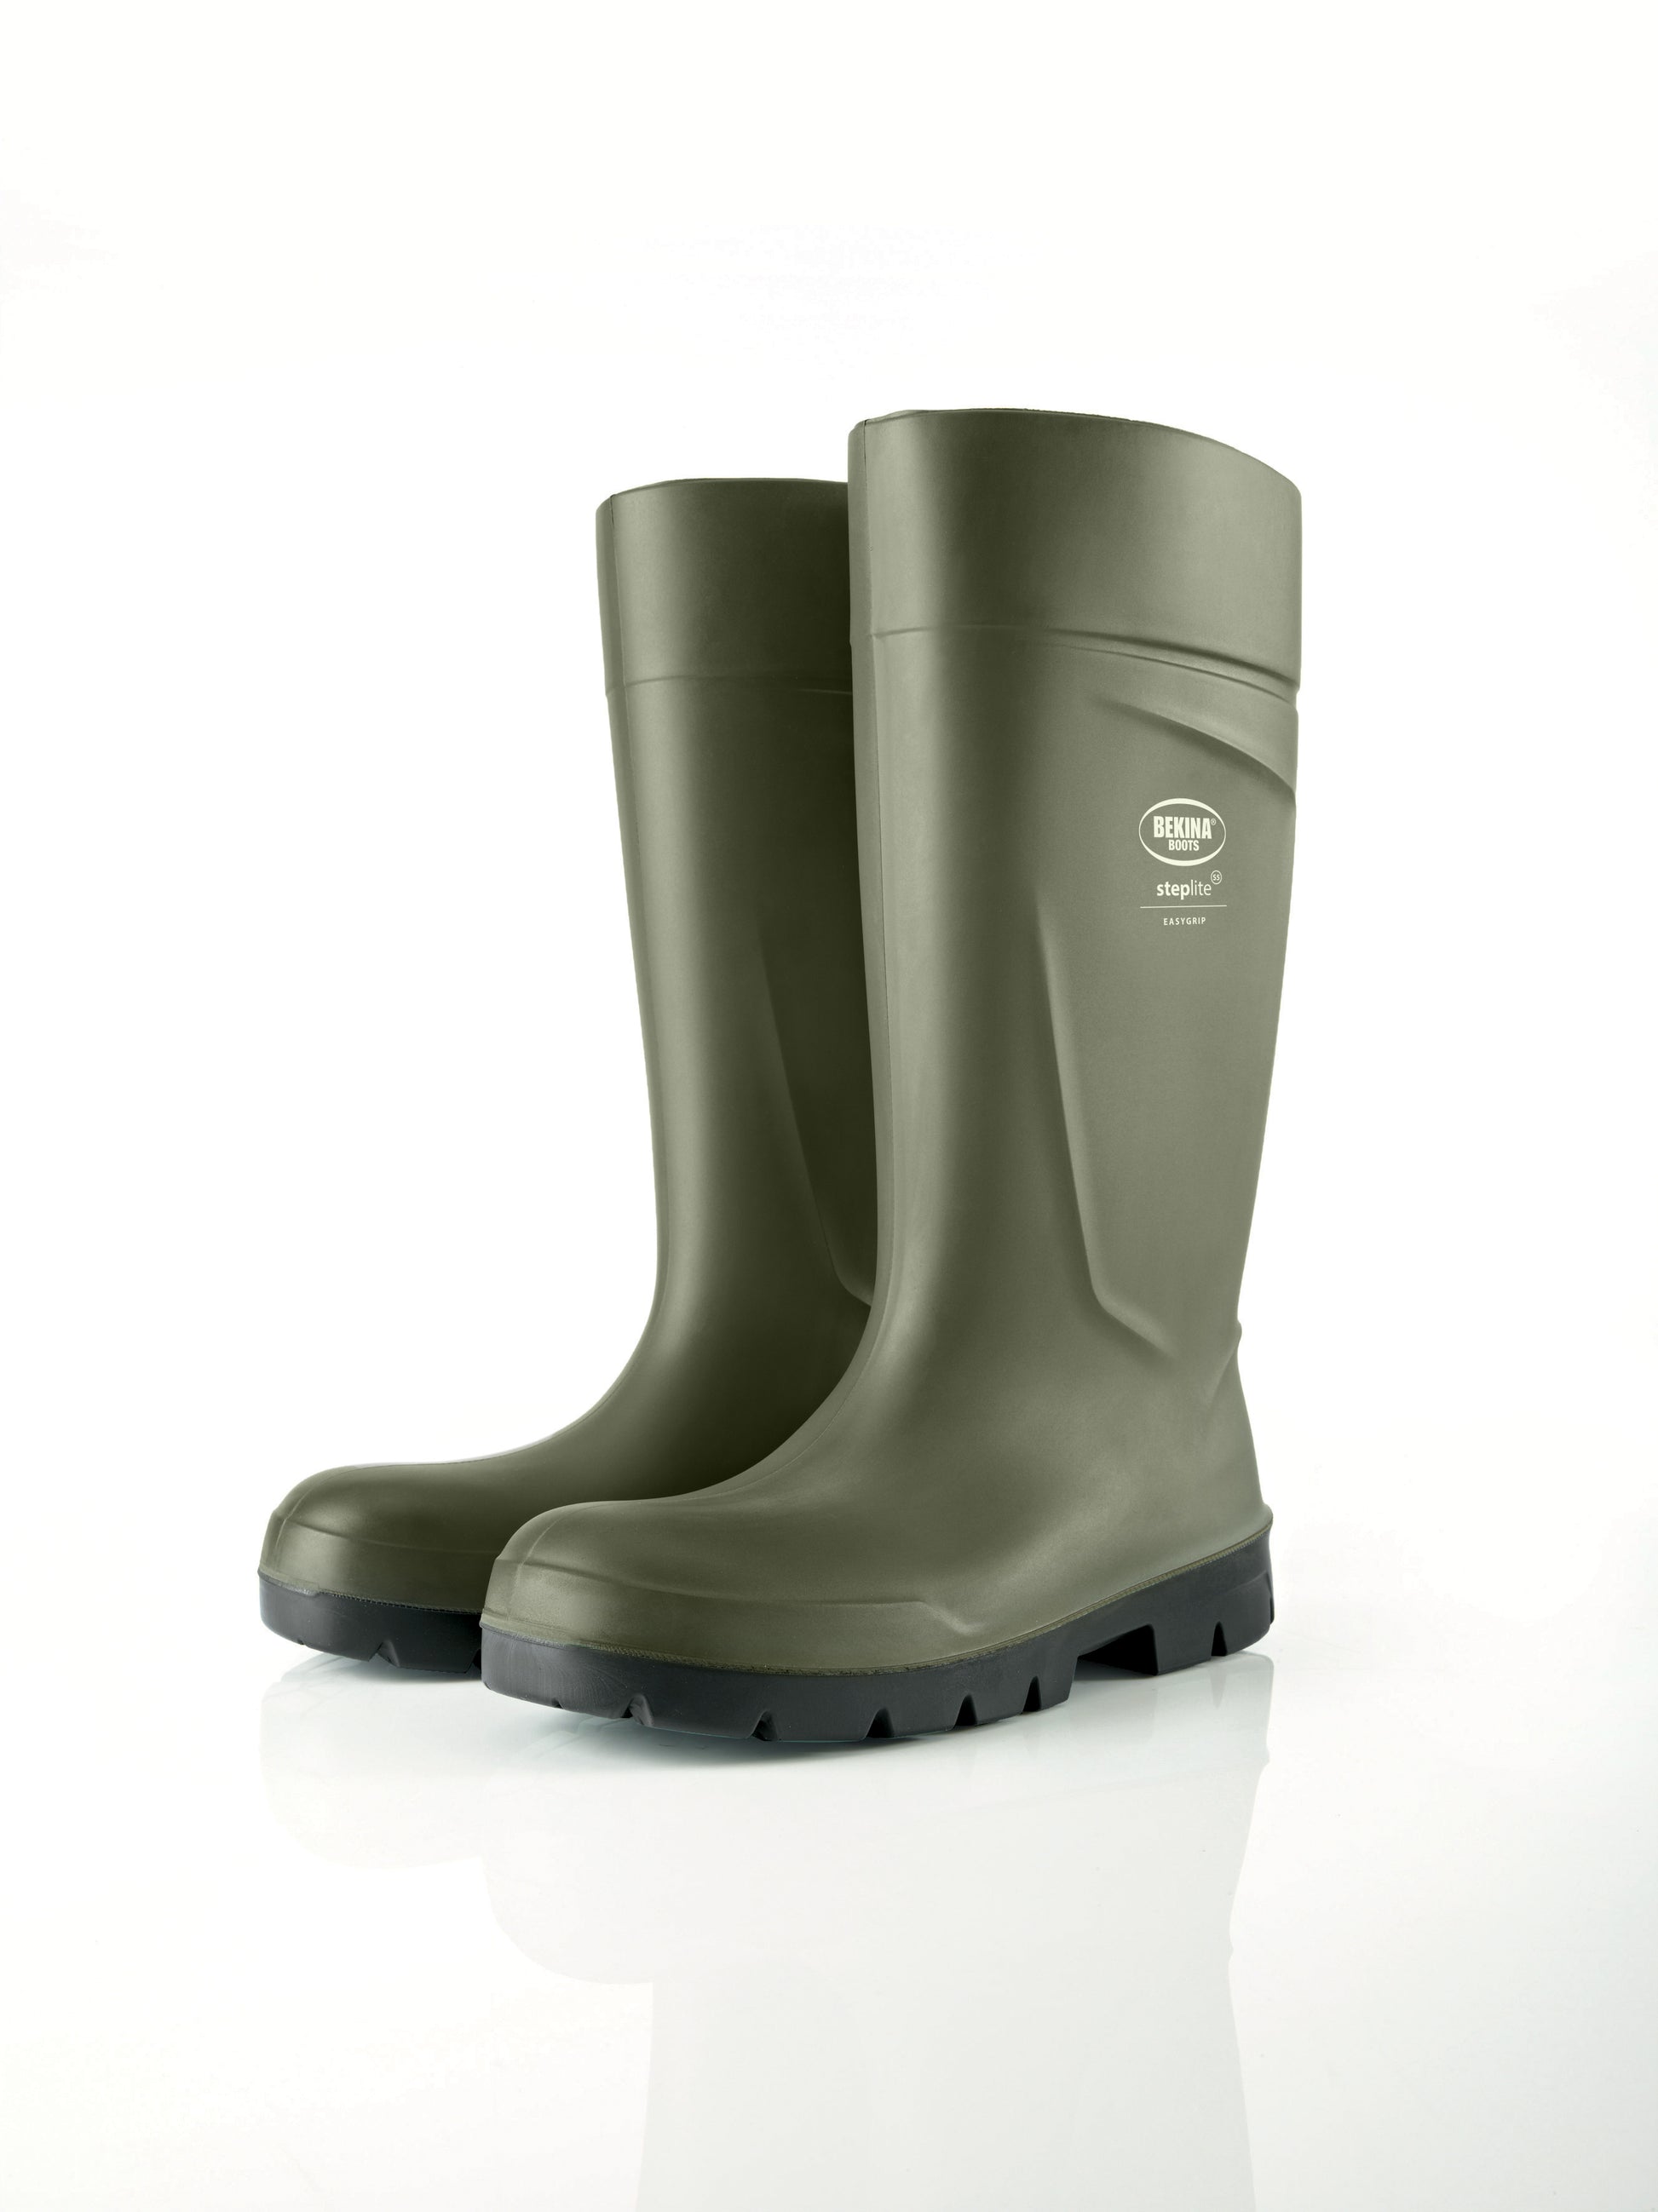 Boots - Bekina StepliteX GRN STP (Sizes 5-13) - KBM Outdoors